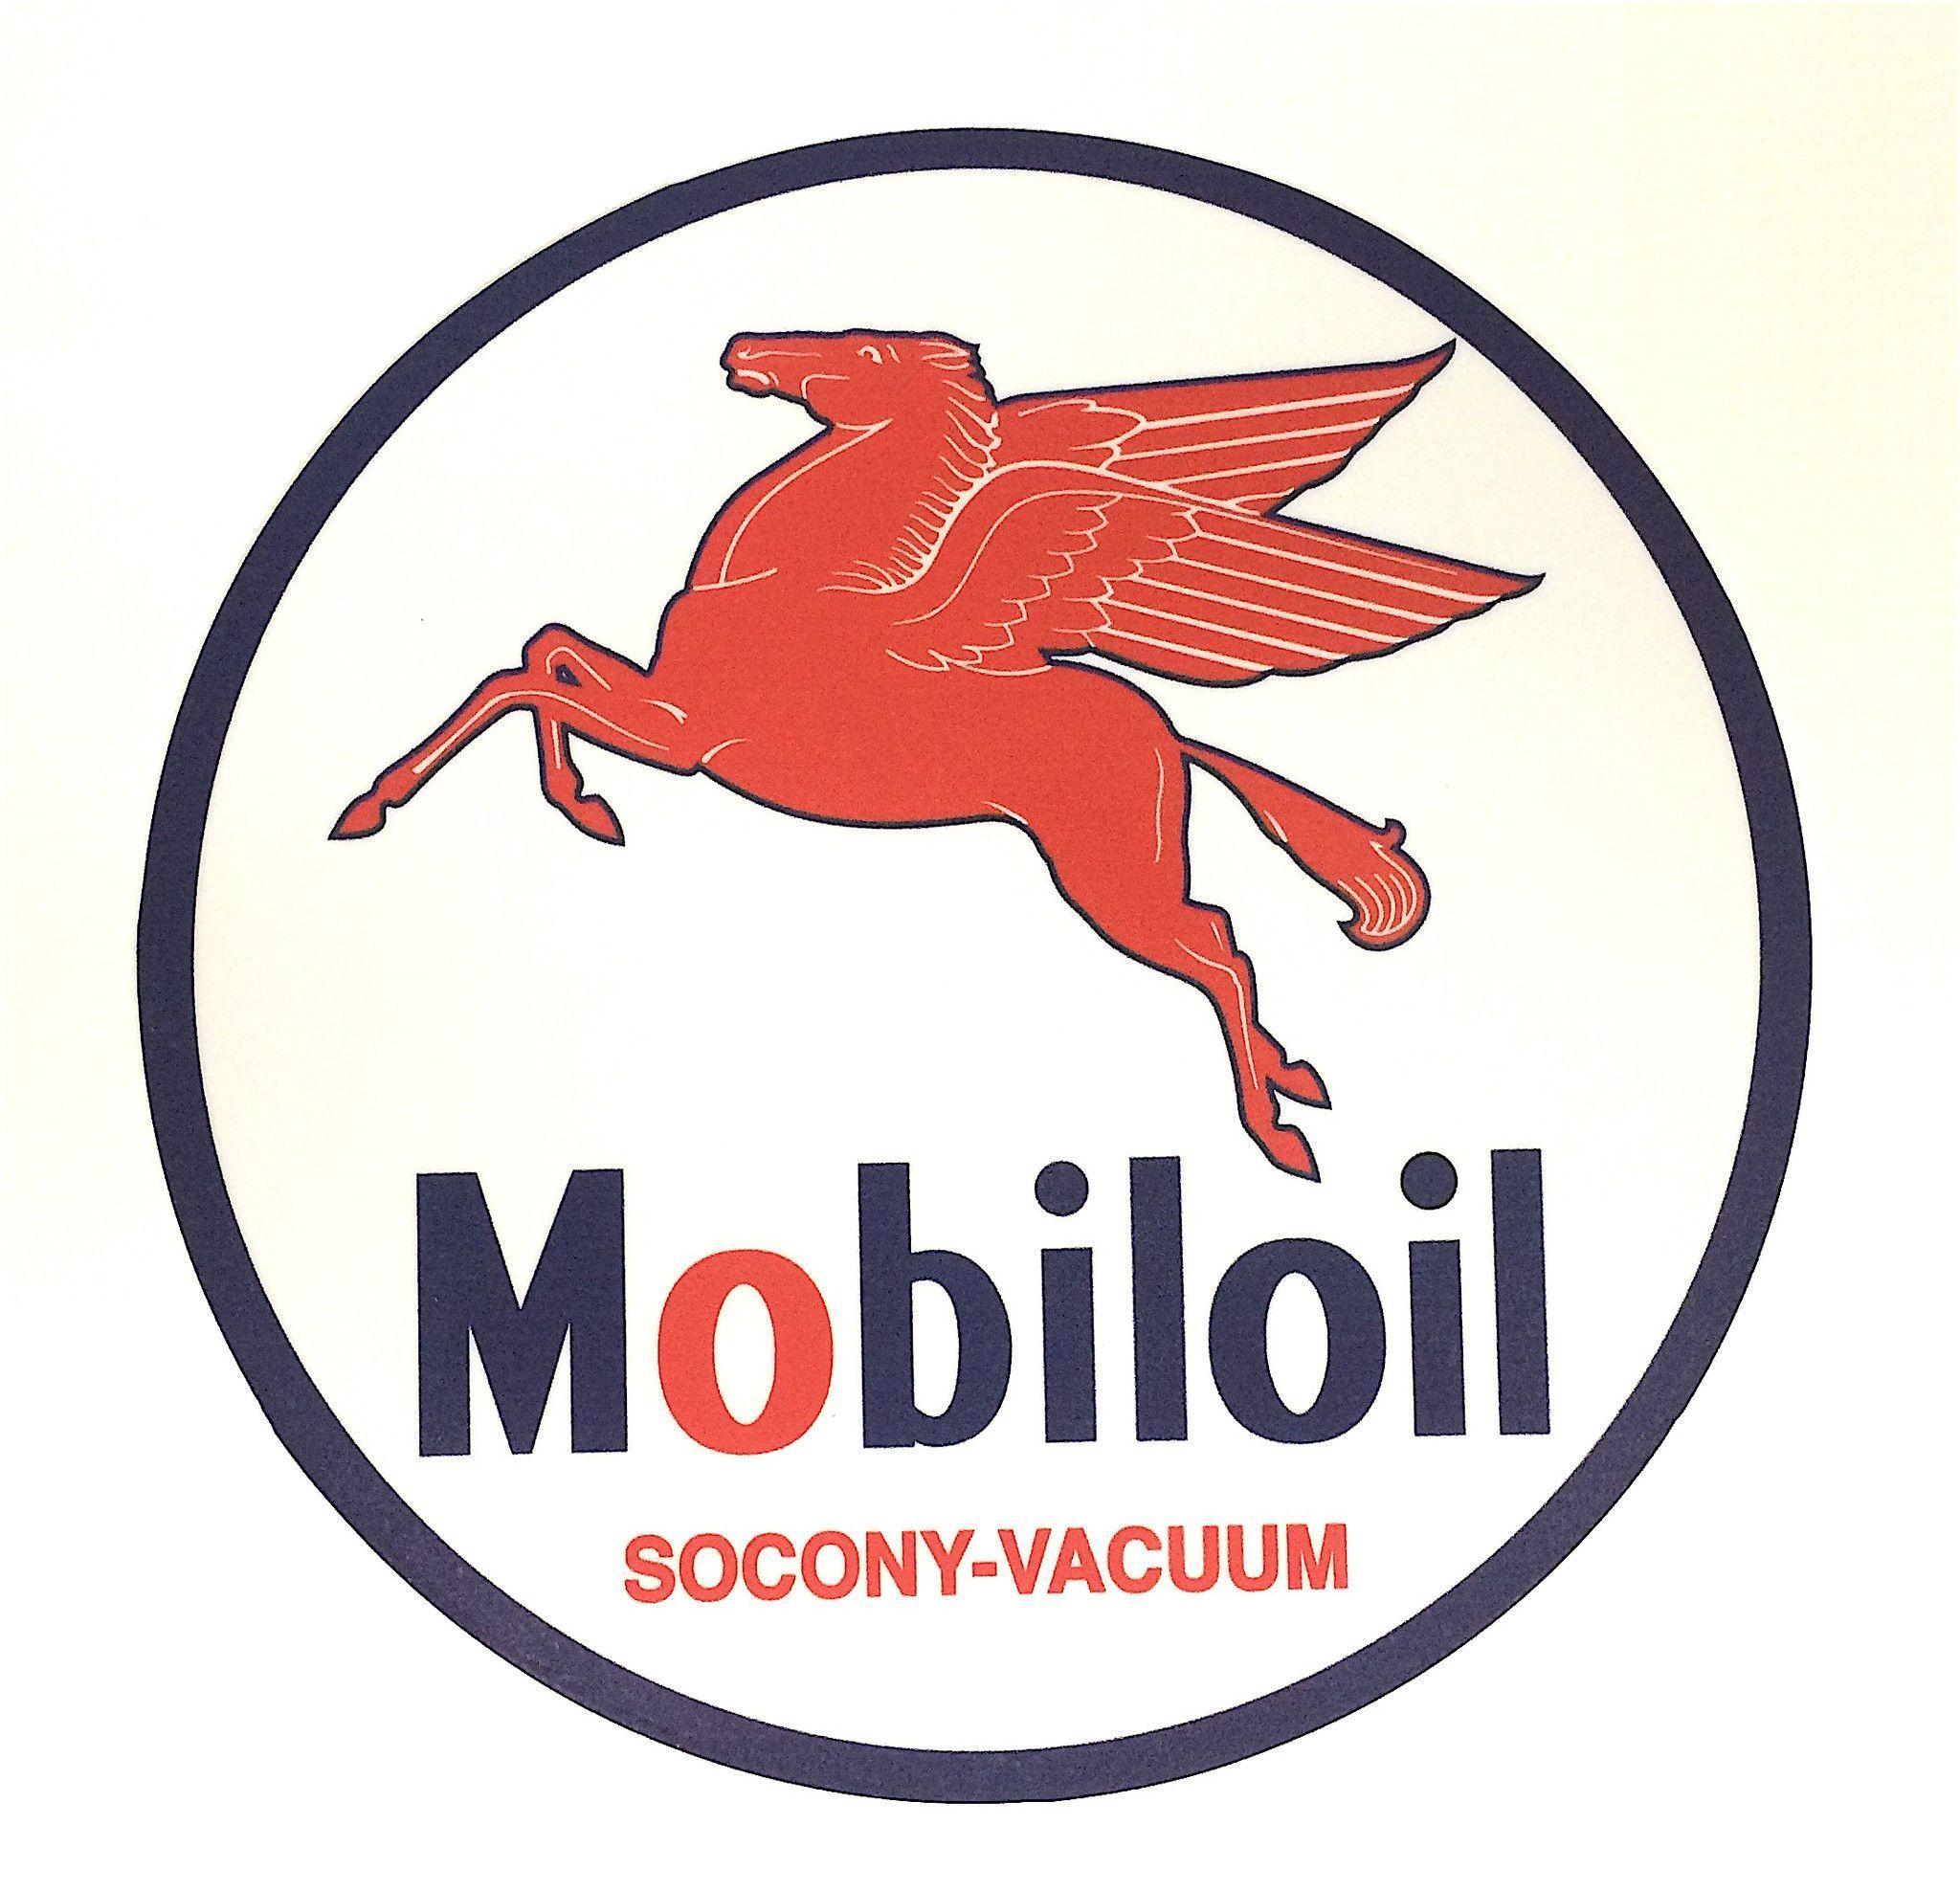 Old Mobil Oil Logo - Mobiloil 7